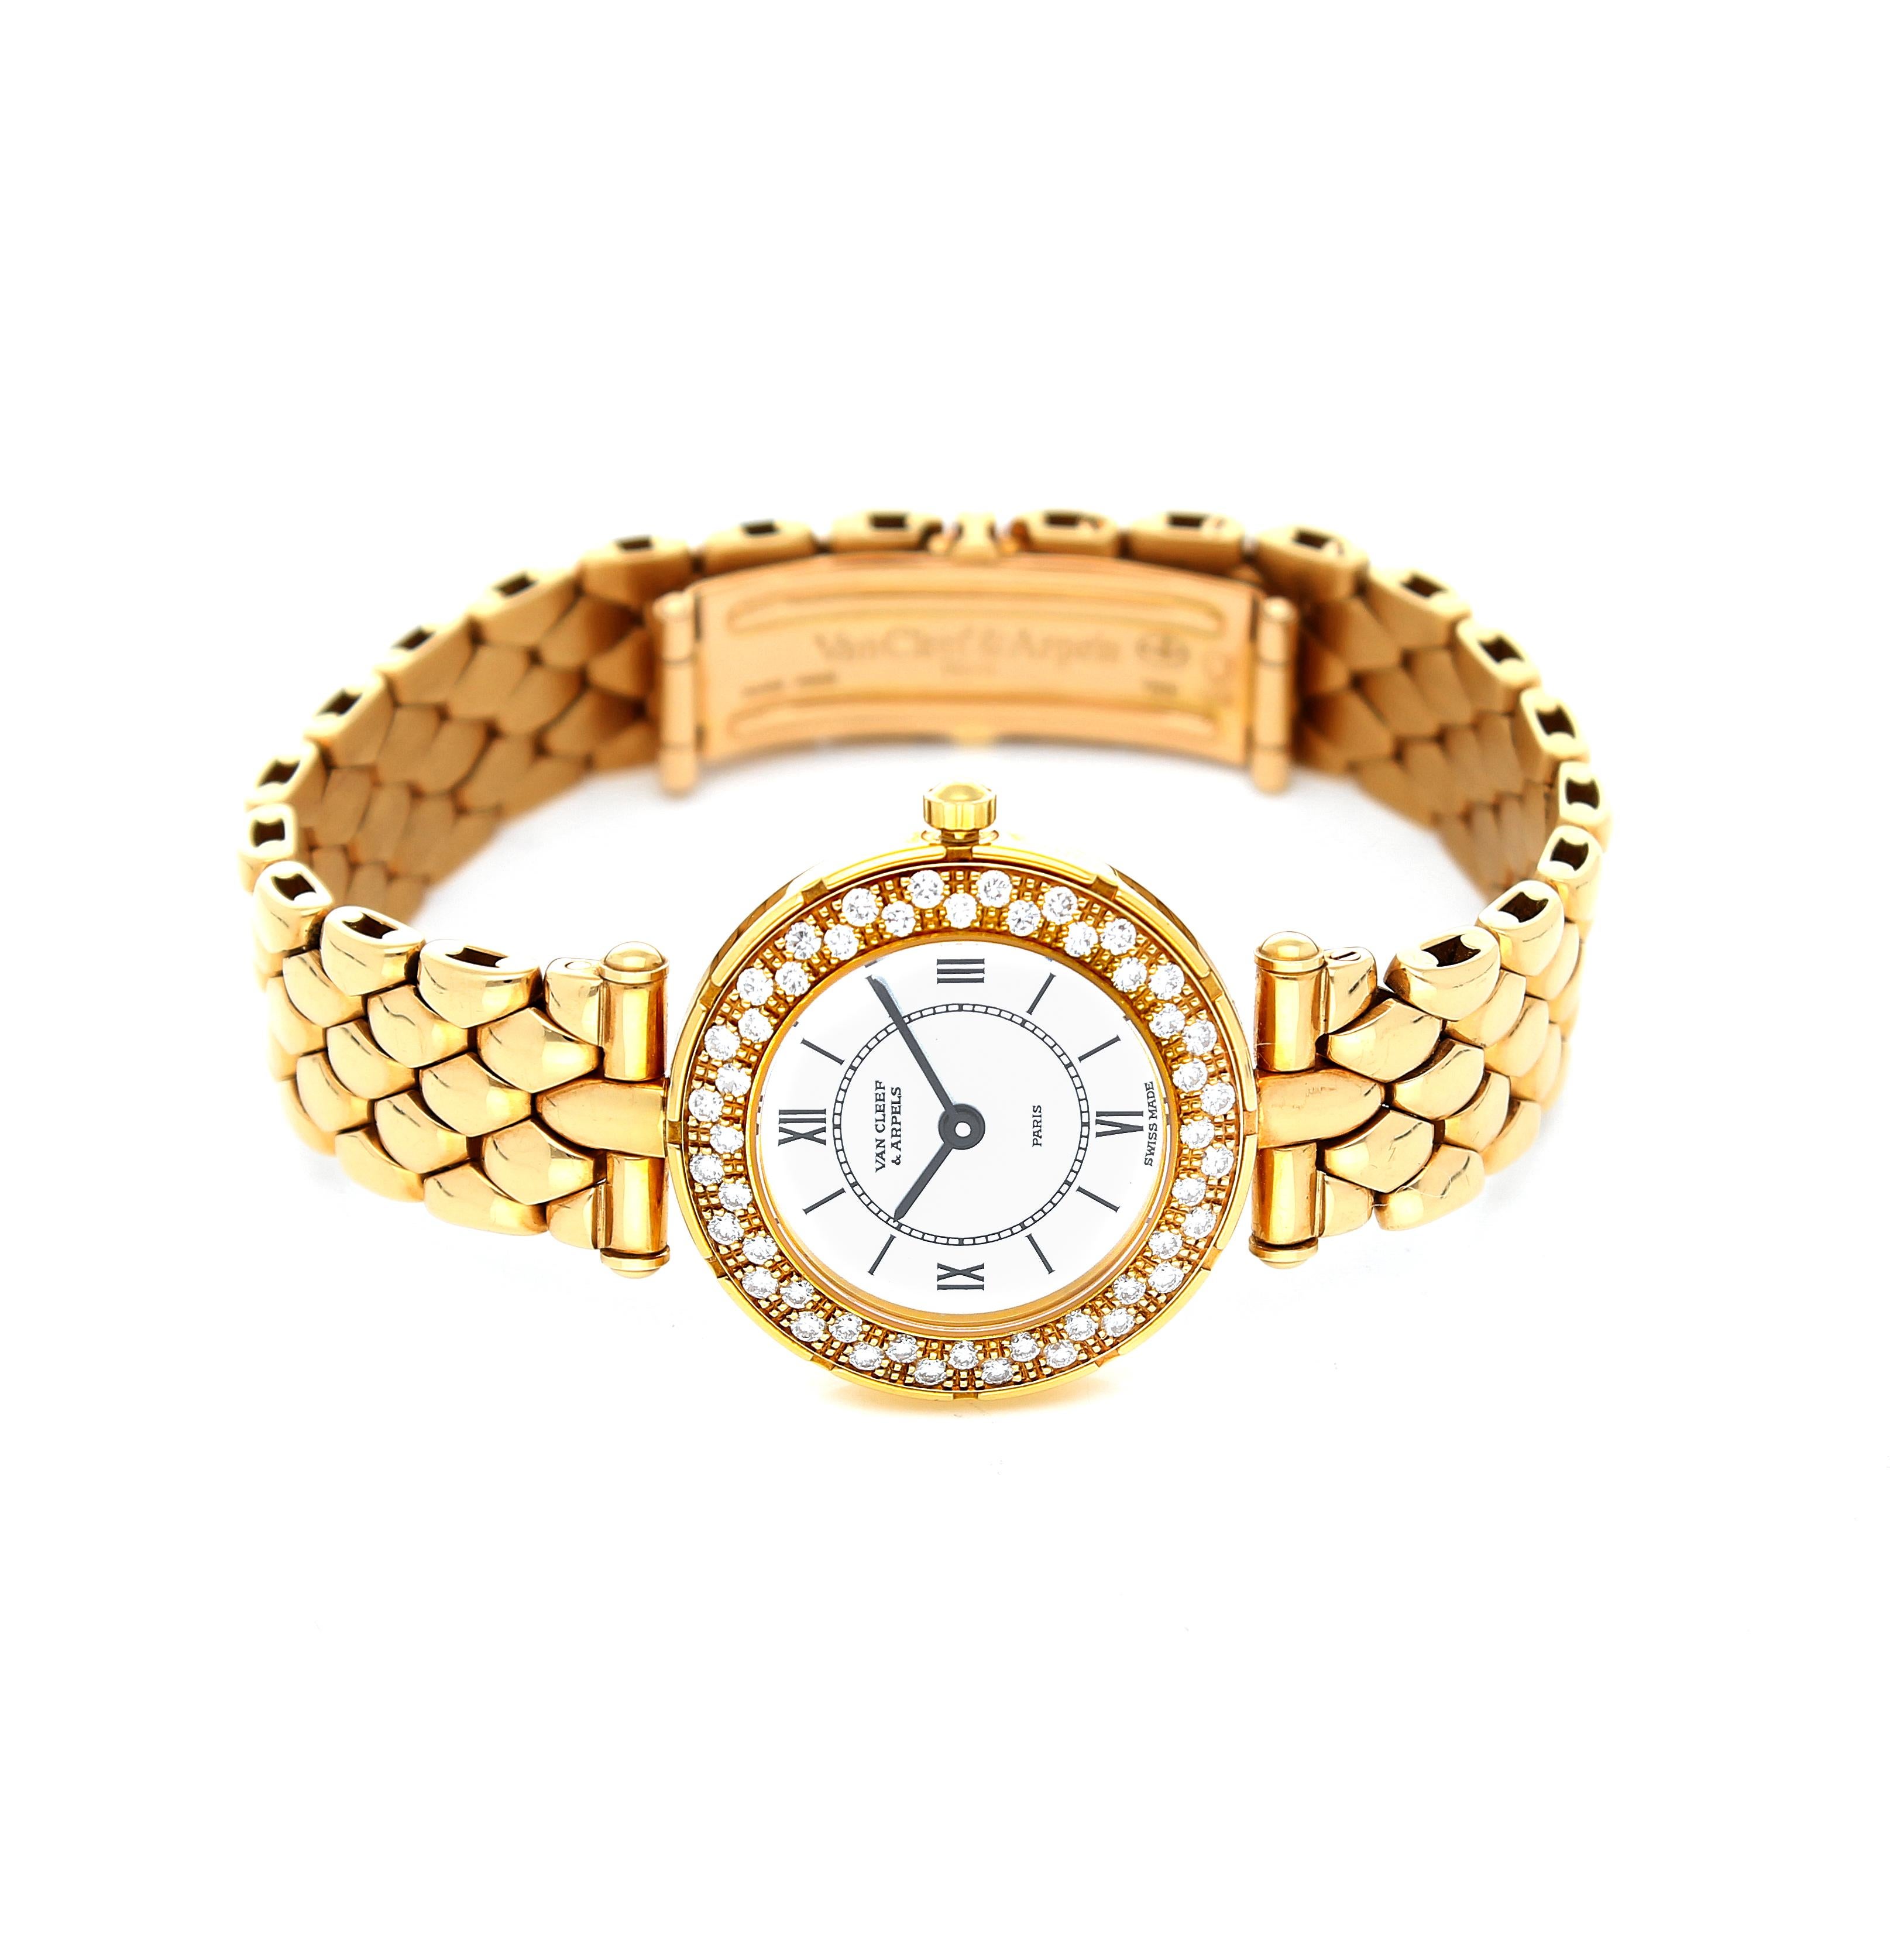 Brilliant Cut Van Cleef & Arpels Watch with Diamonds in 18 Karat Gold